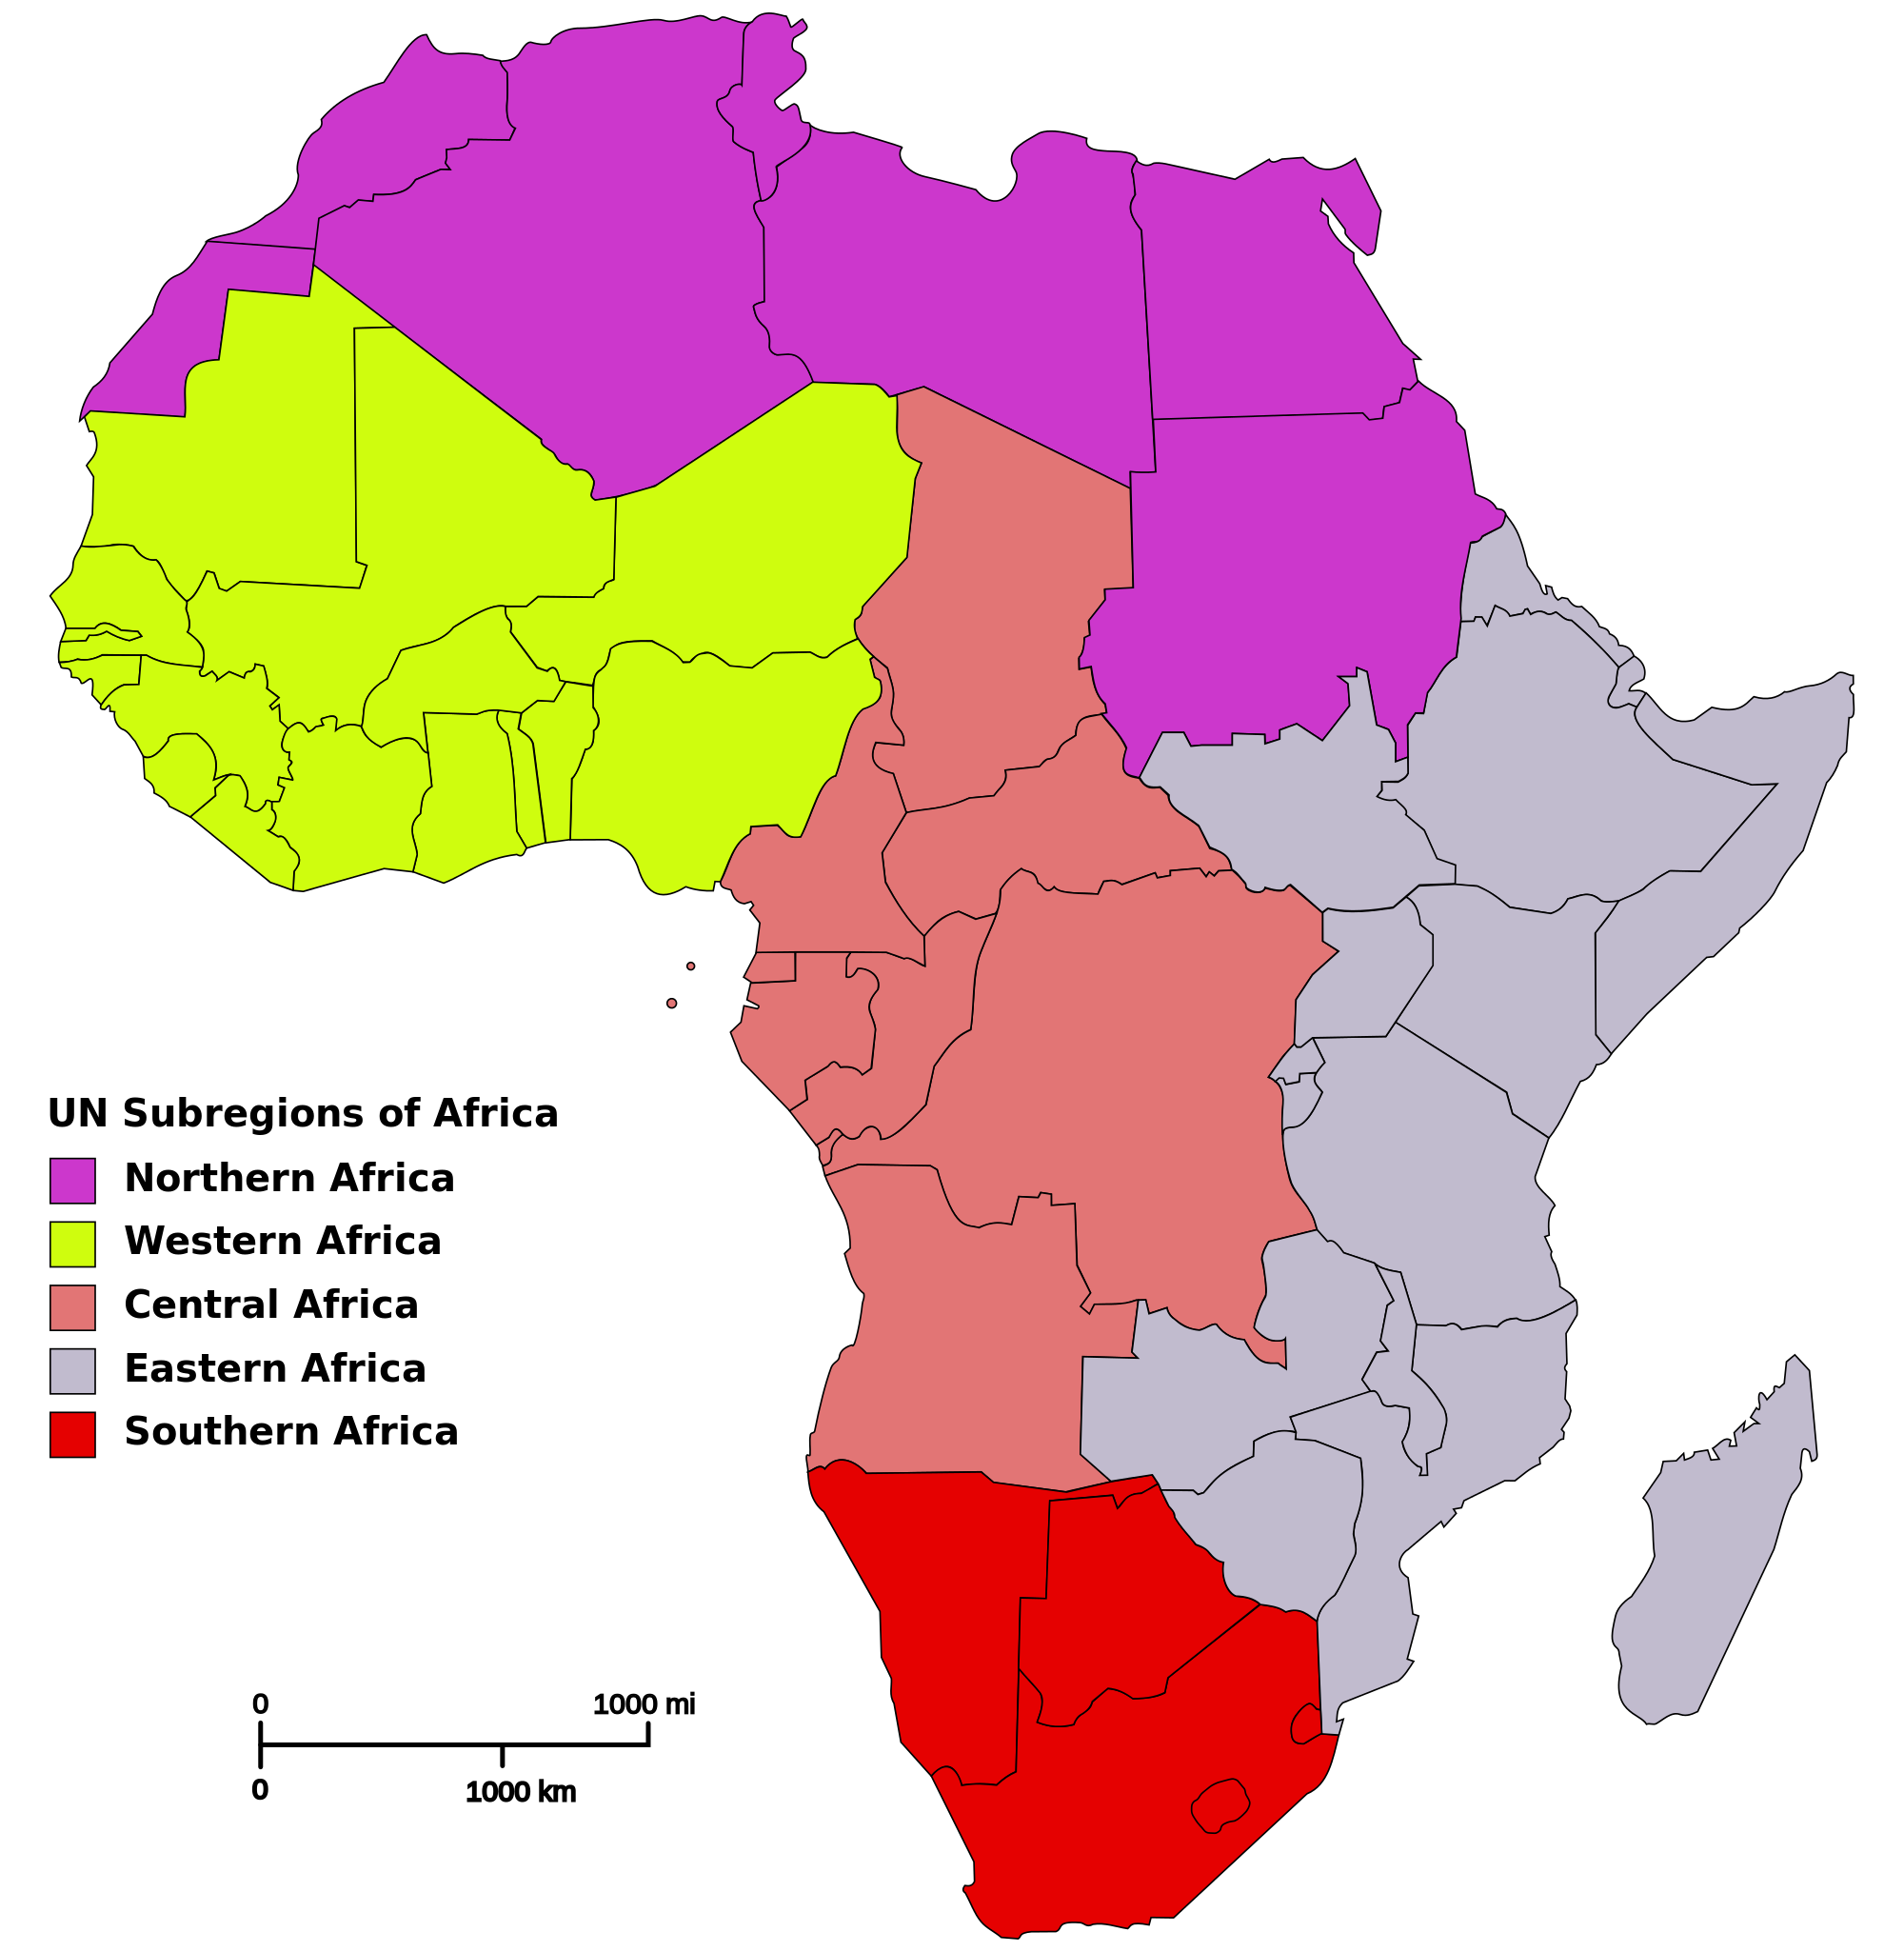 Atlas of Africa